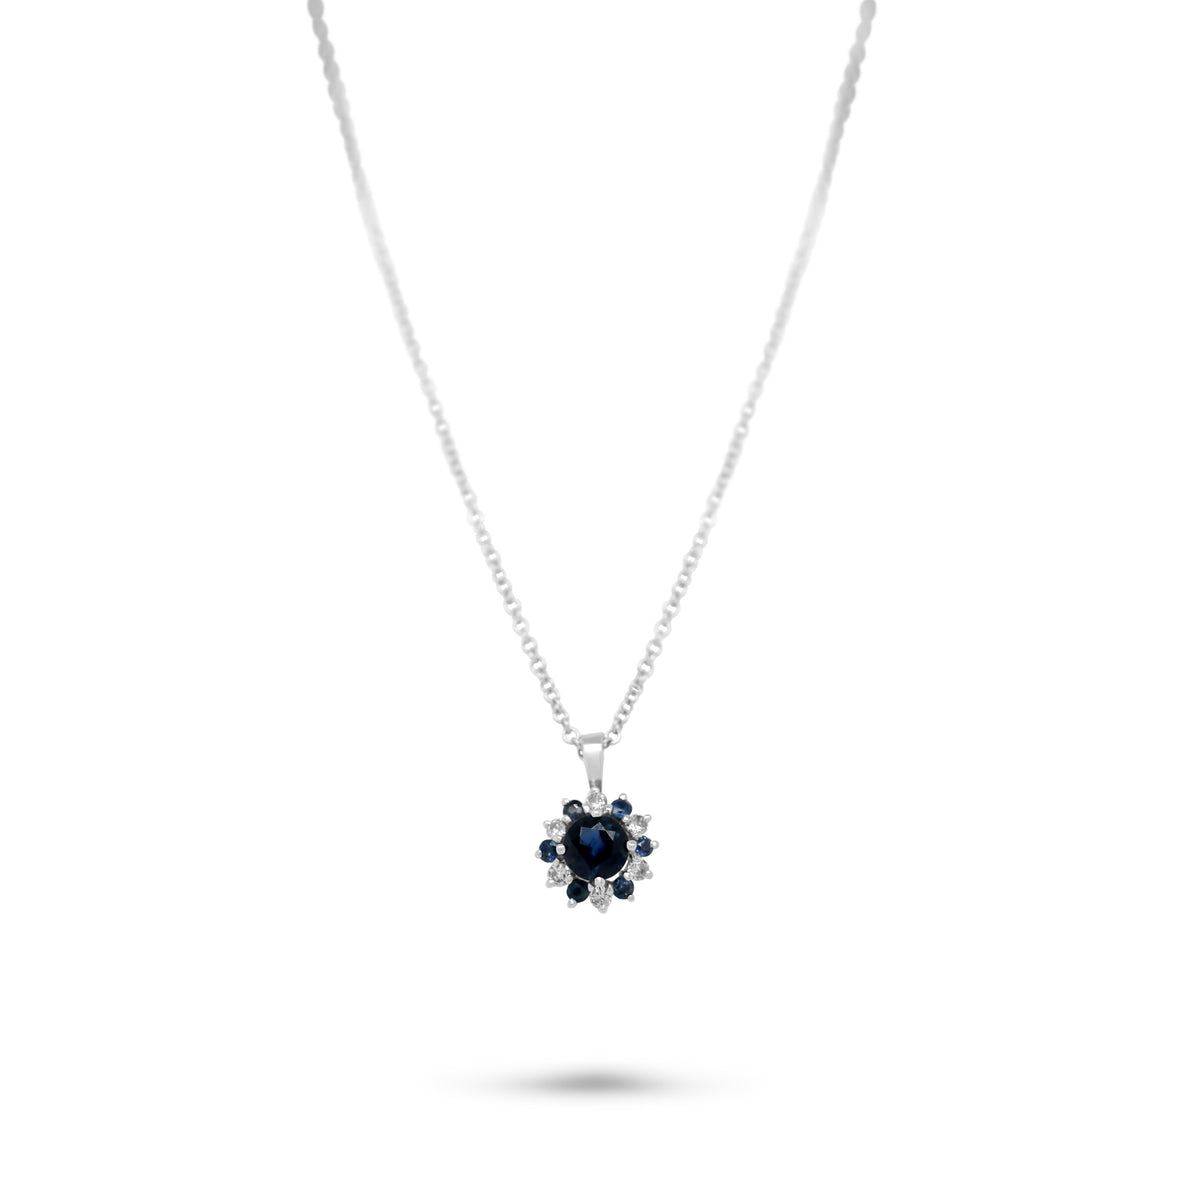 14k white gold modern estate pendant blue sapphire diamond flower necklace